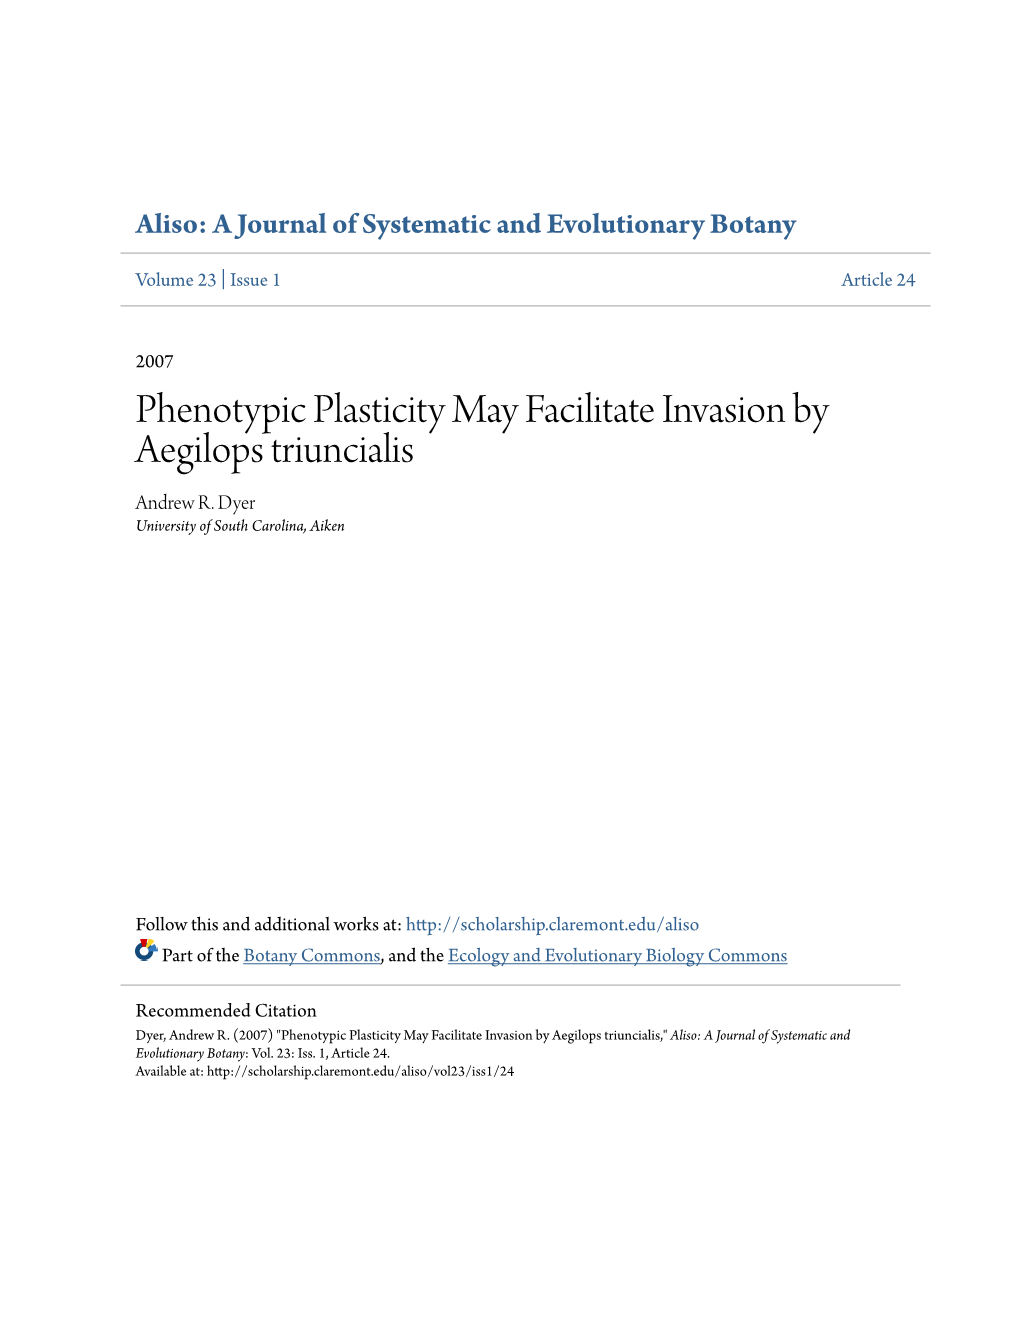 Phenotypic Plasticity May Facilitate Invasion by Aegilops Triuncialis Andrew R